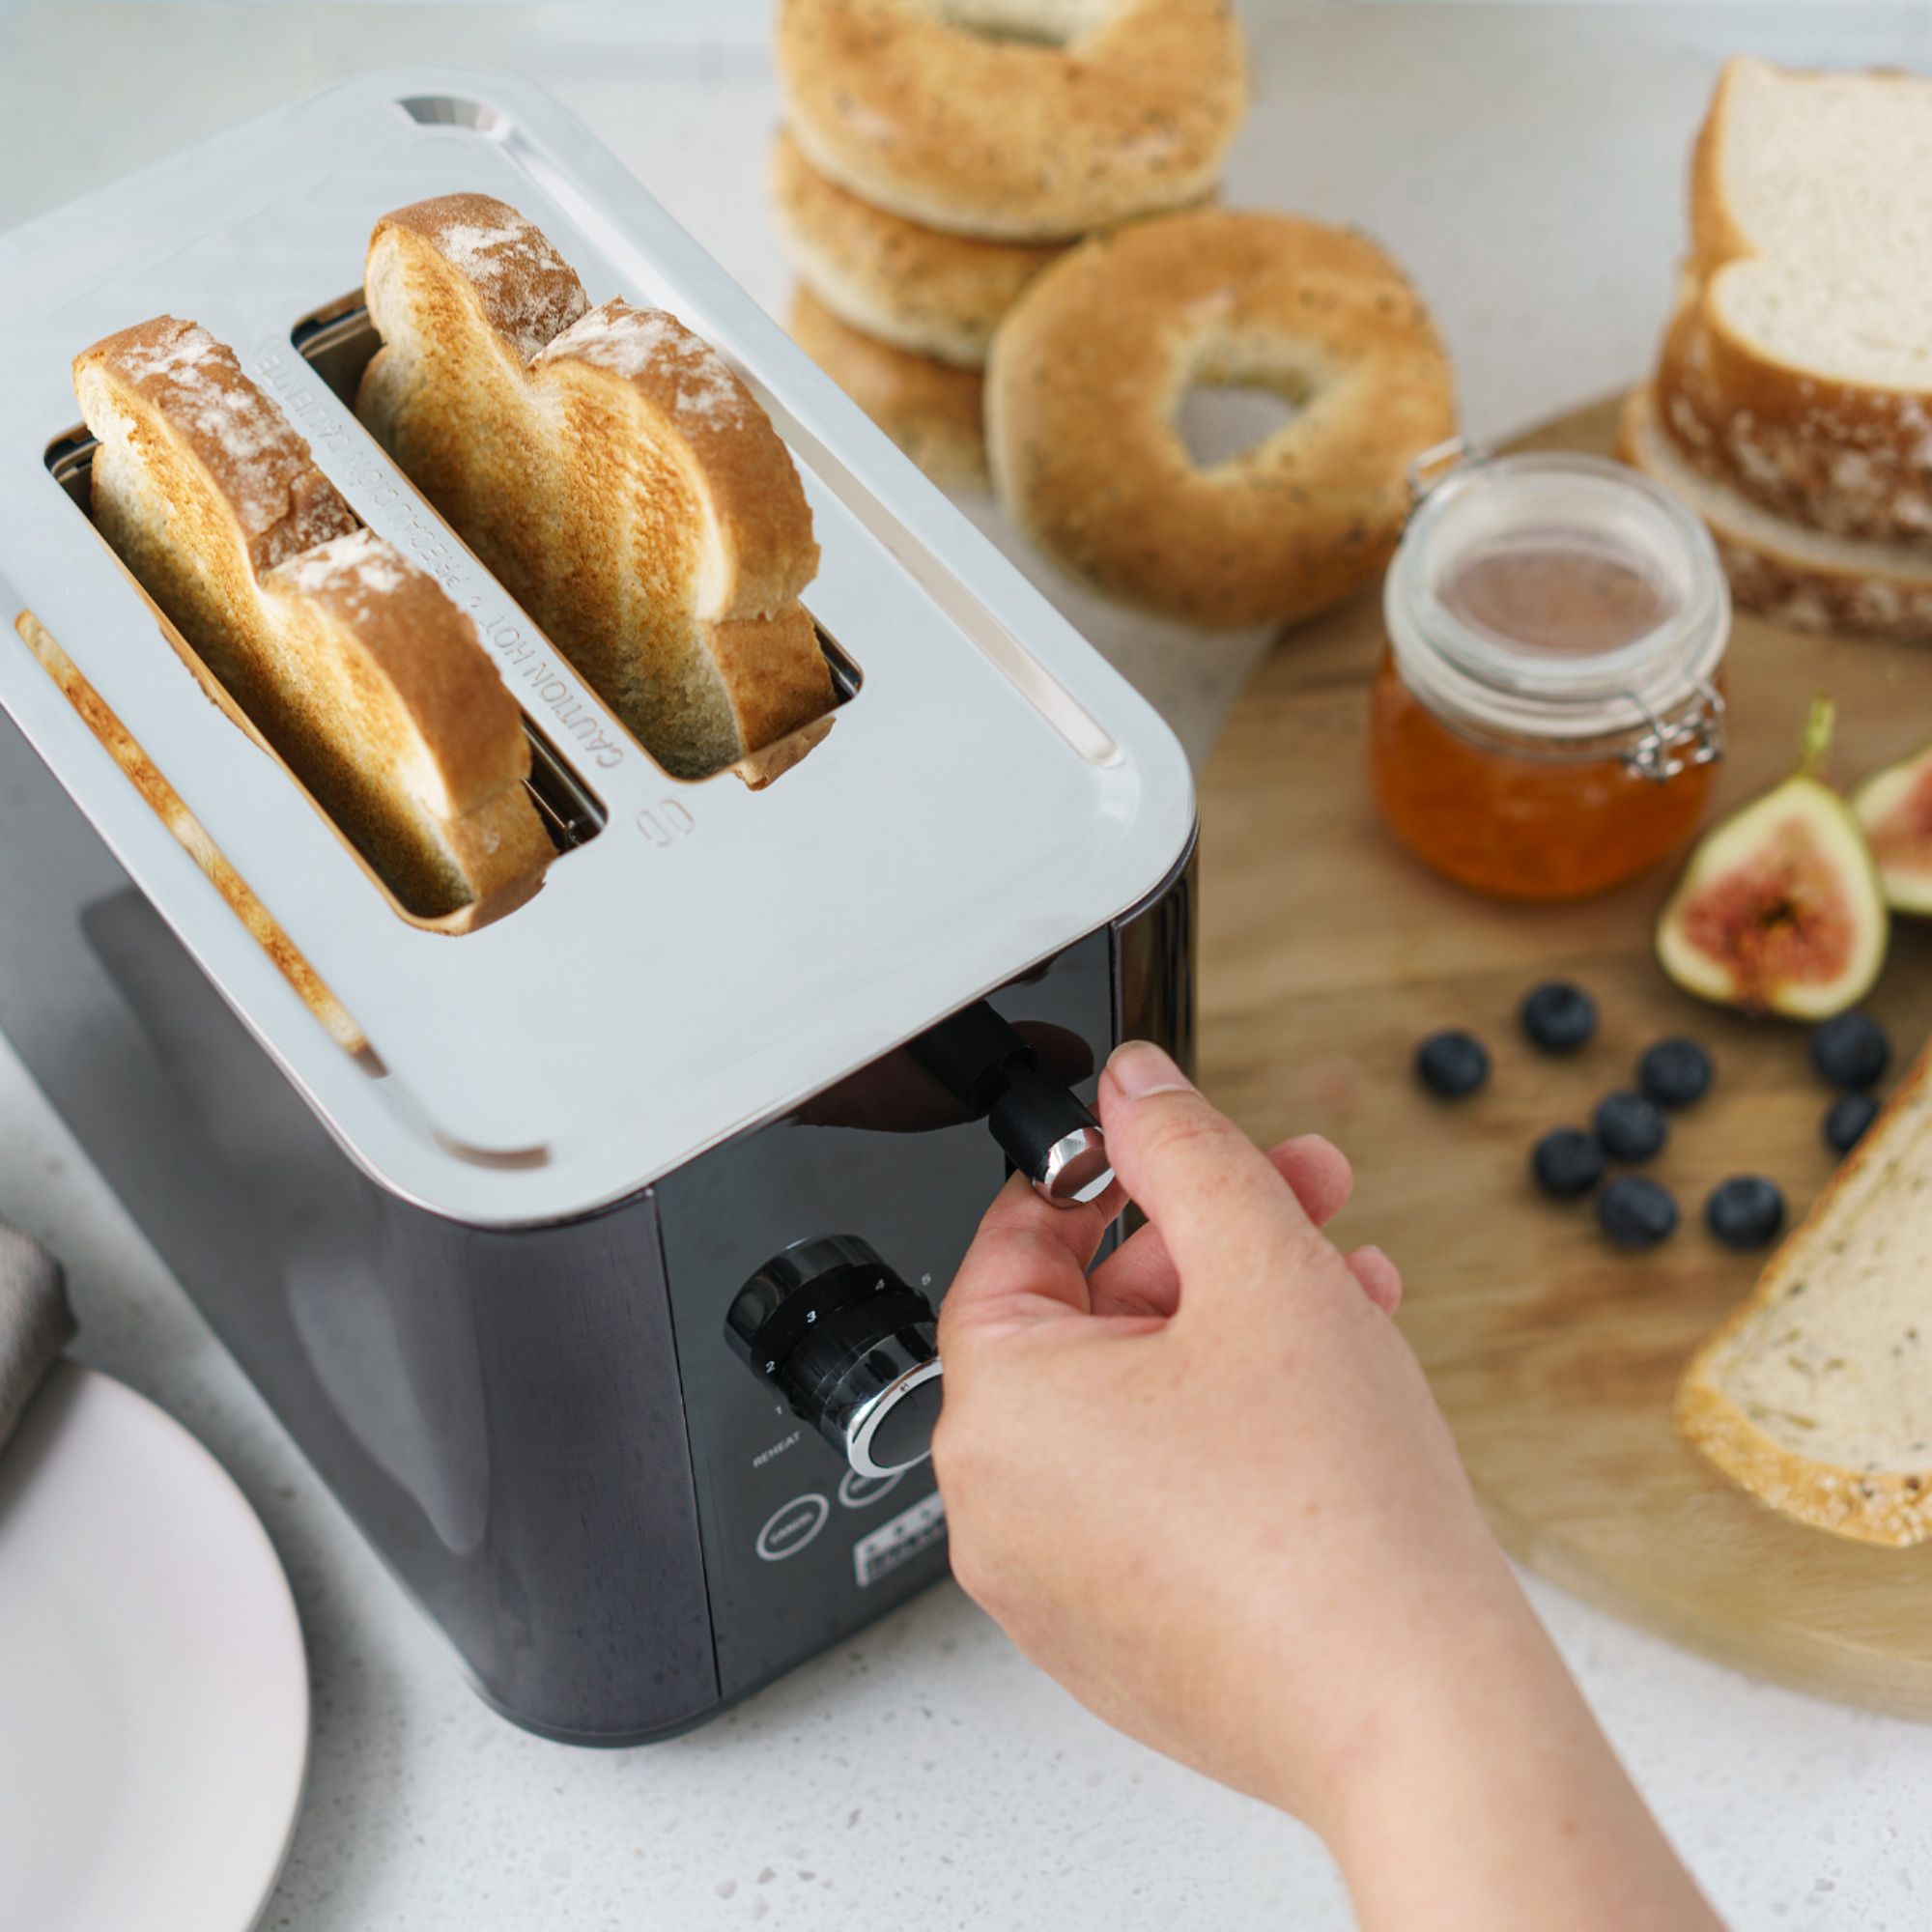 BELLA Pro 4 Slice Digital Toaster, Stainless Steel 